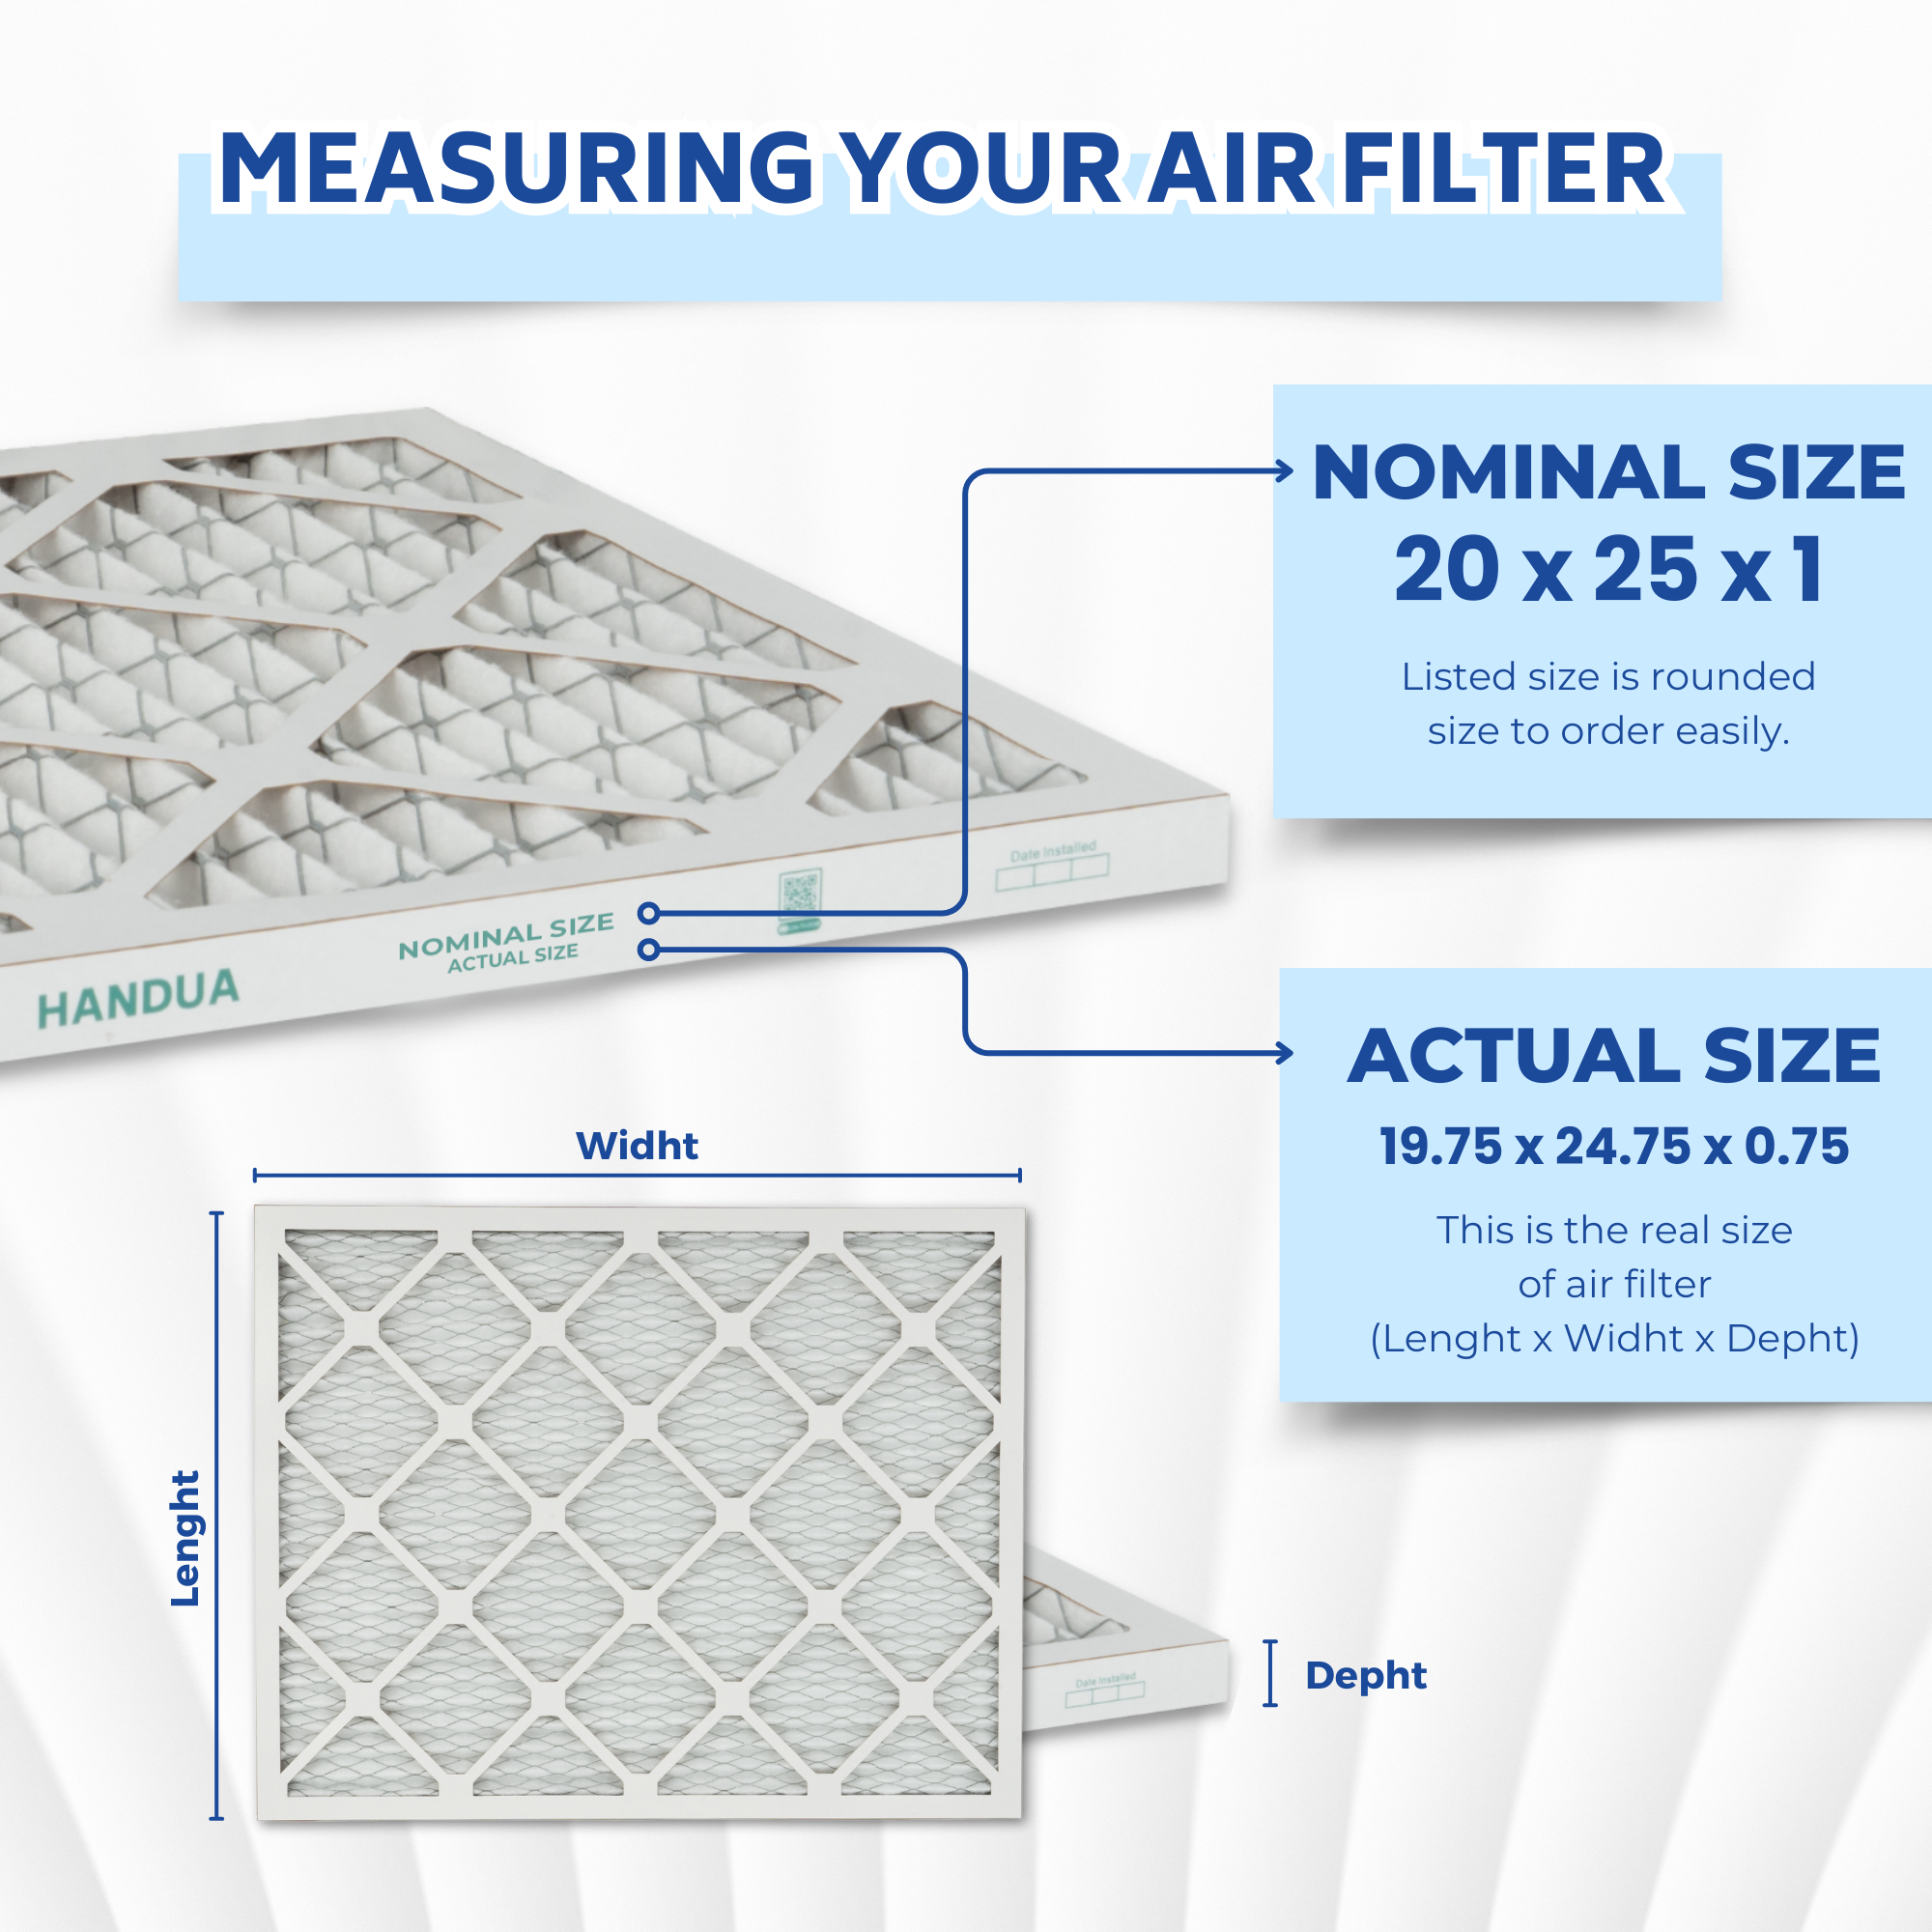 Handua 20x25x1 Air Filter MERV 13 Optimal Control, Plated Furnace AC Air Replacement Filter, 4 Pack (Actual Size: 19.75" x 24.75" x 0.75")